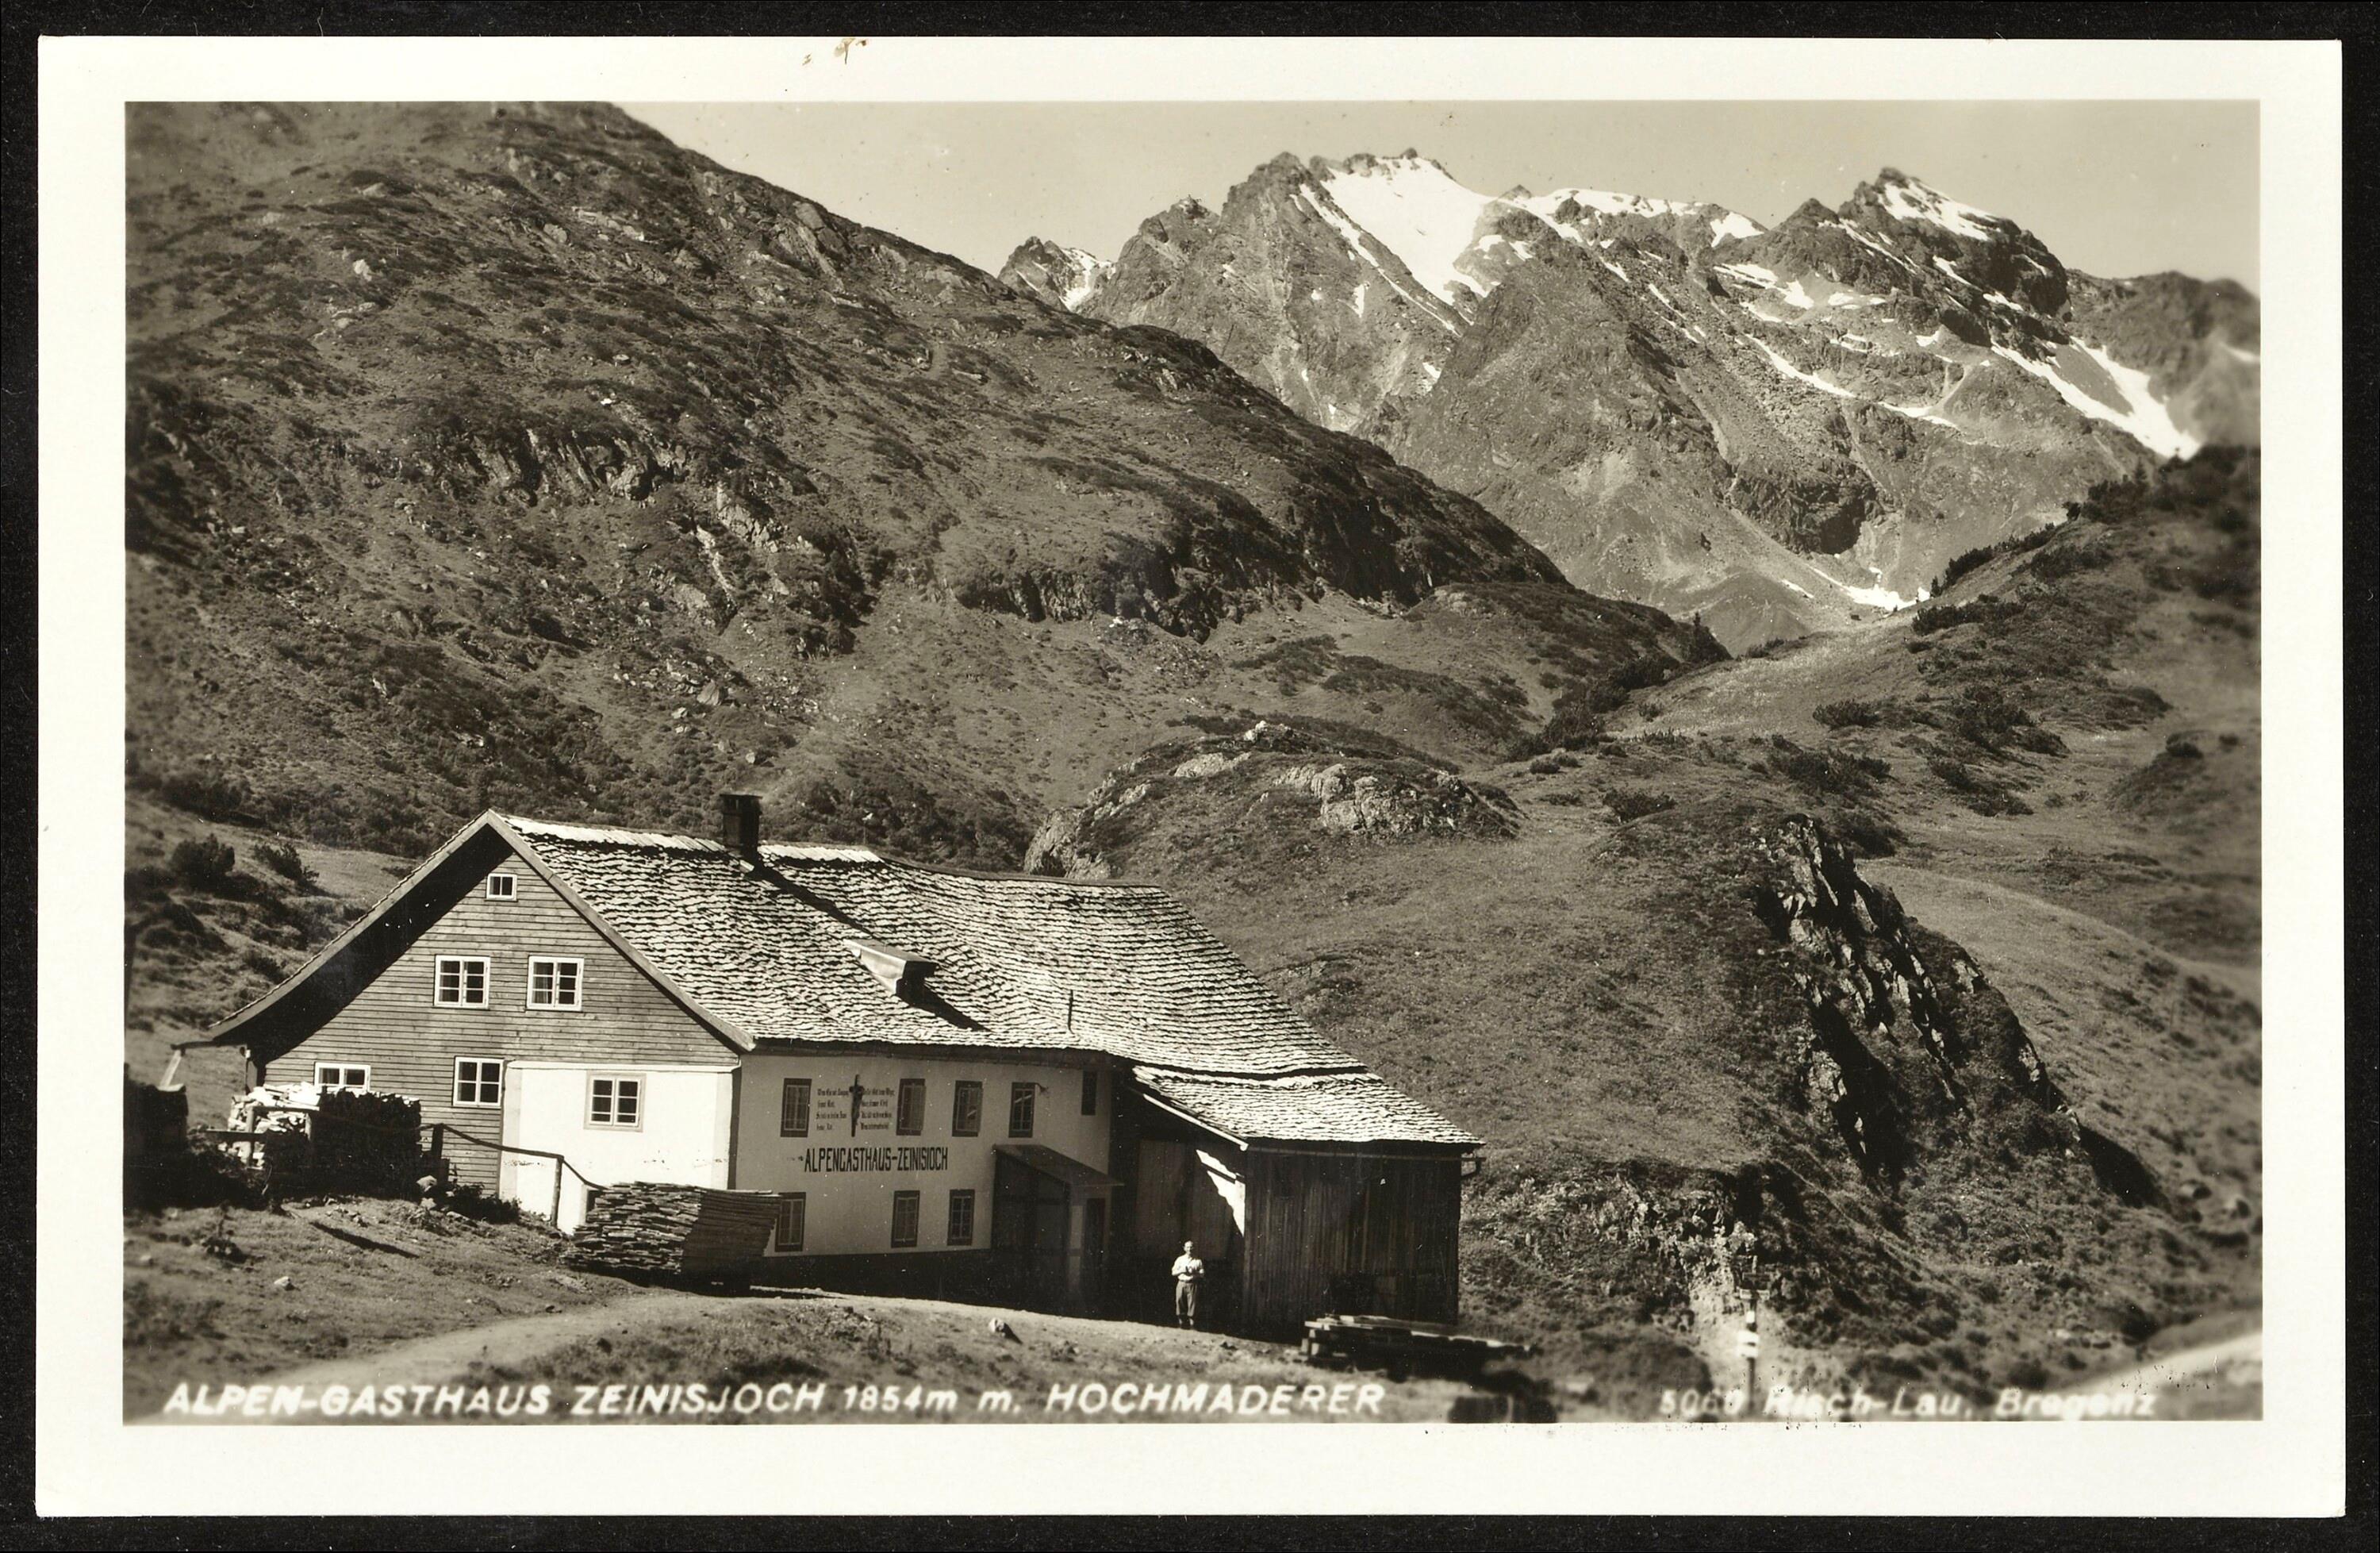 [Gaschurn] Alpen-Gasthaus Zeinisjoch 1854 m Hochmaderer></div>


    <hr>
    <div class=